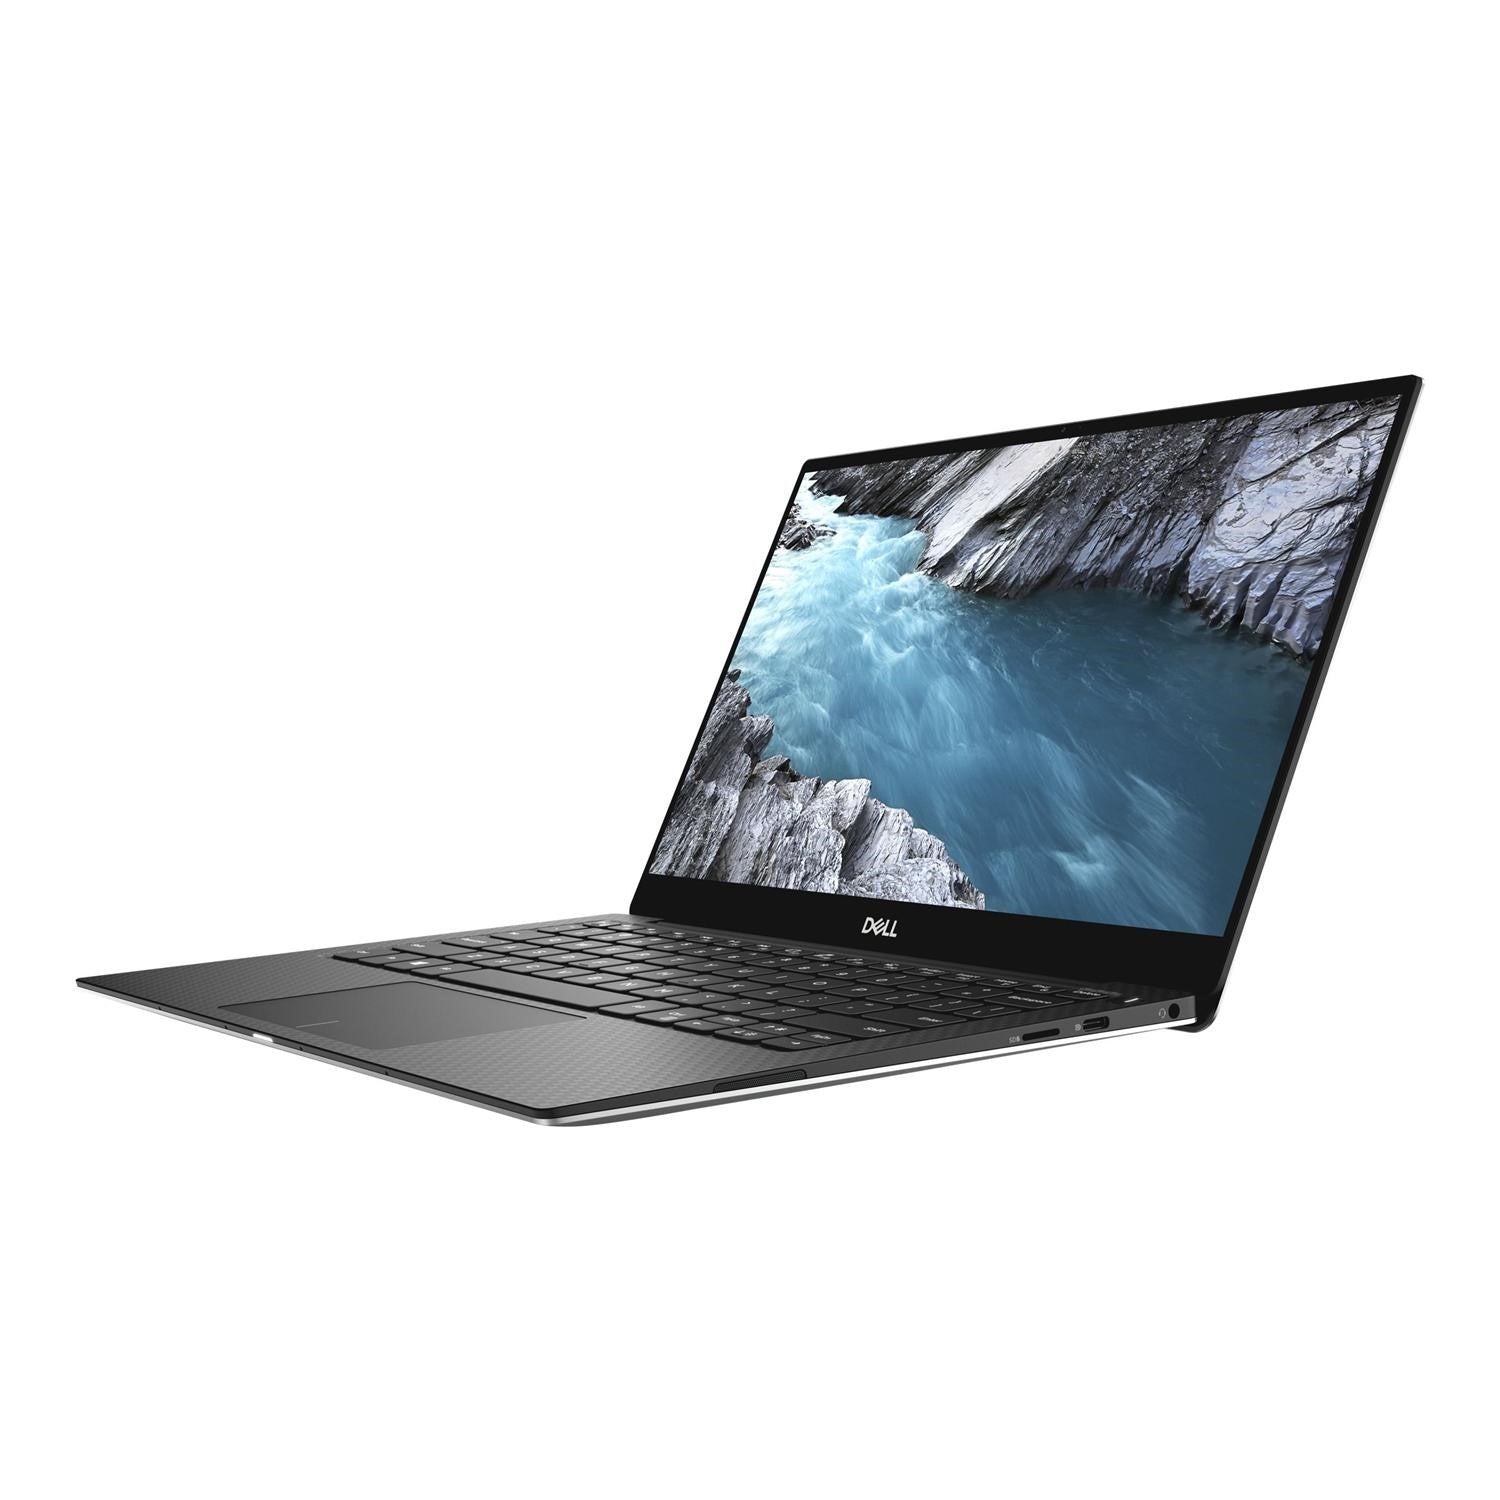 Dell XPS 13 9380 Laptop, Intel Core i7, 8GB RAM, 256GB SSD, 13.3”, Silver - Refurbished Good